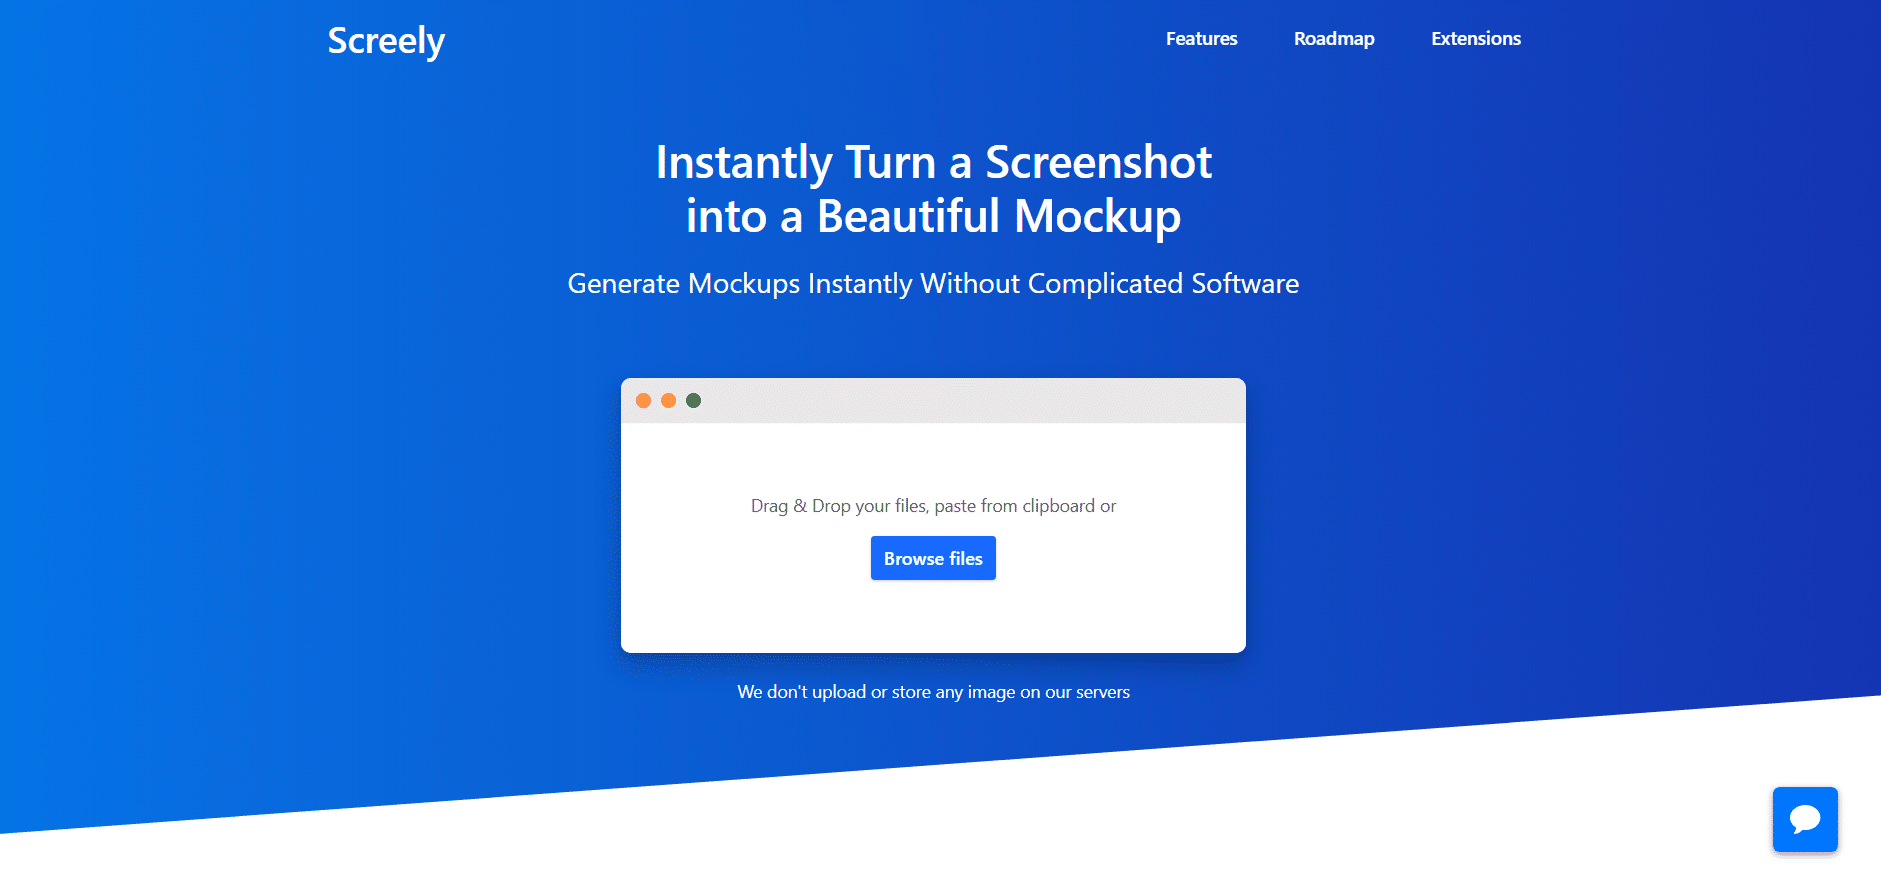 Screenly screenshot tool to create awesome screenshot images